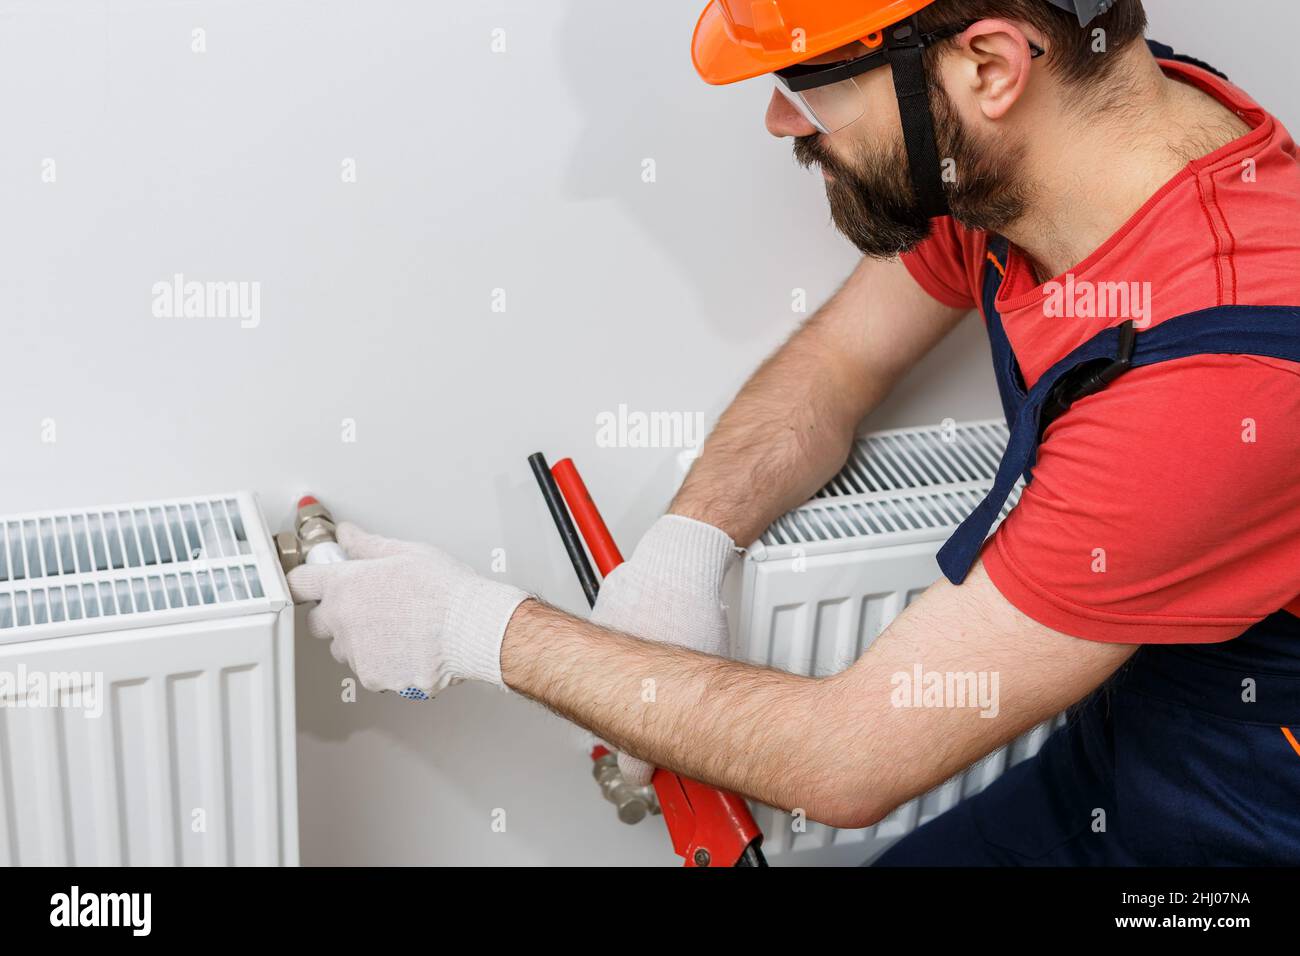 a worker in an orange helmet installs radiators in the house Stock Photo